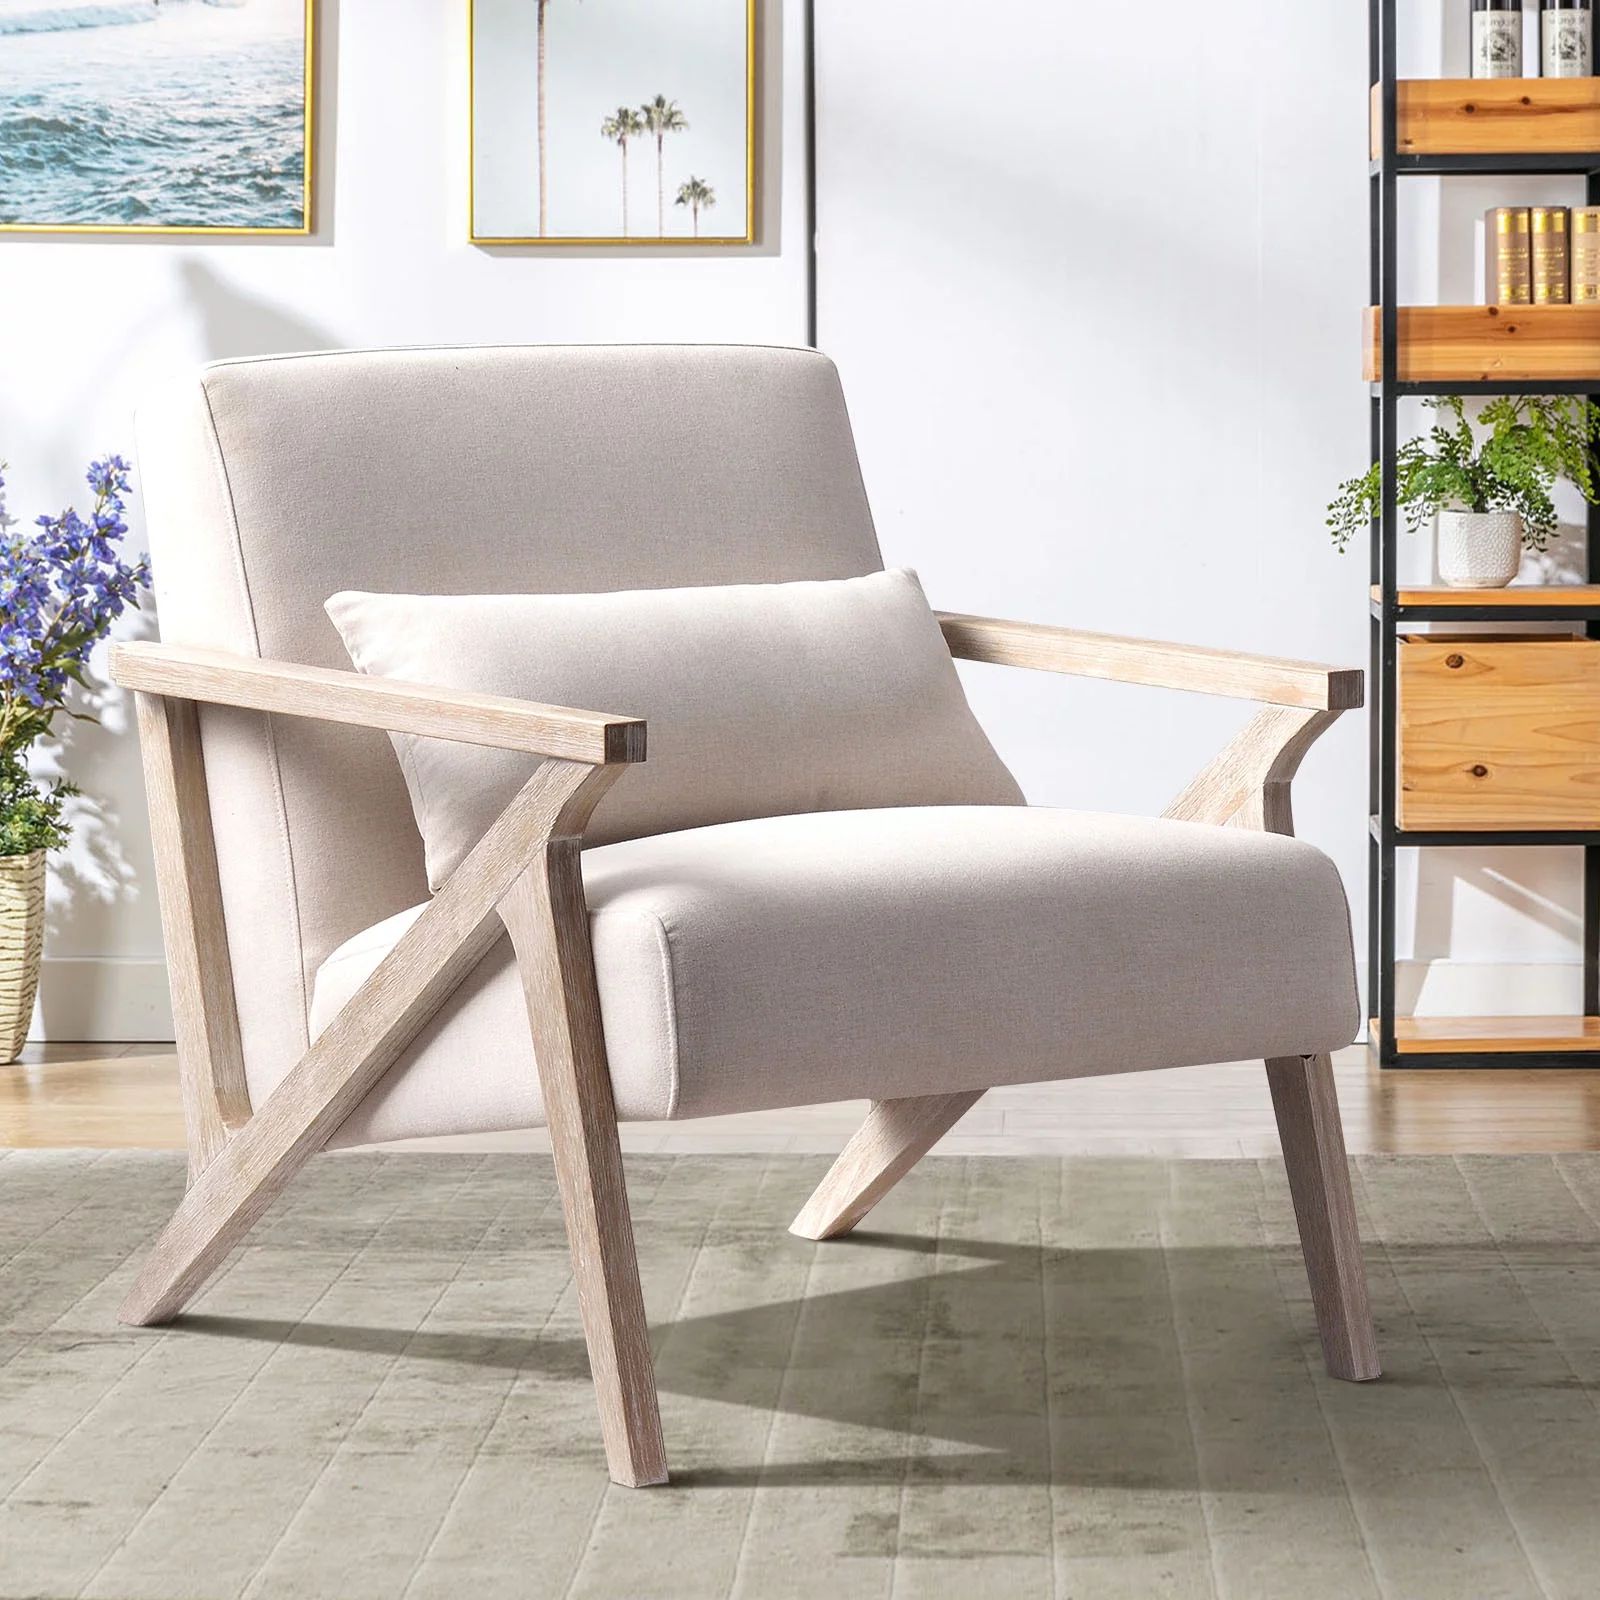 Bonzy Home Mid Century Accent Chair, Single Sofa Armchair for Living Room, Bedroom, Balcont,Beige | Walmart (US)